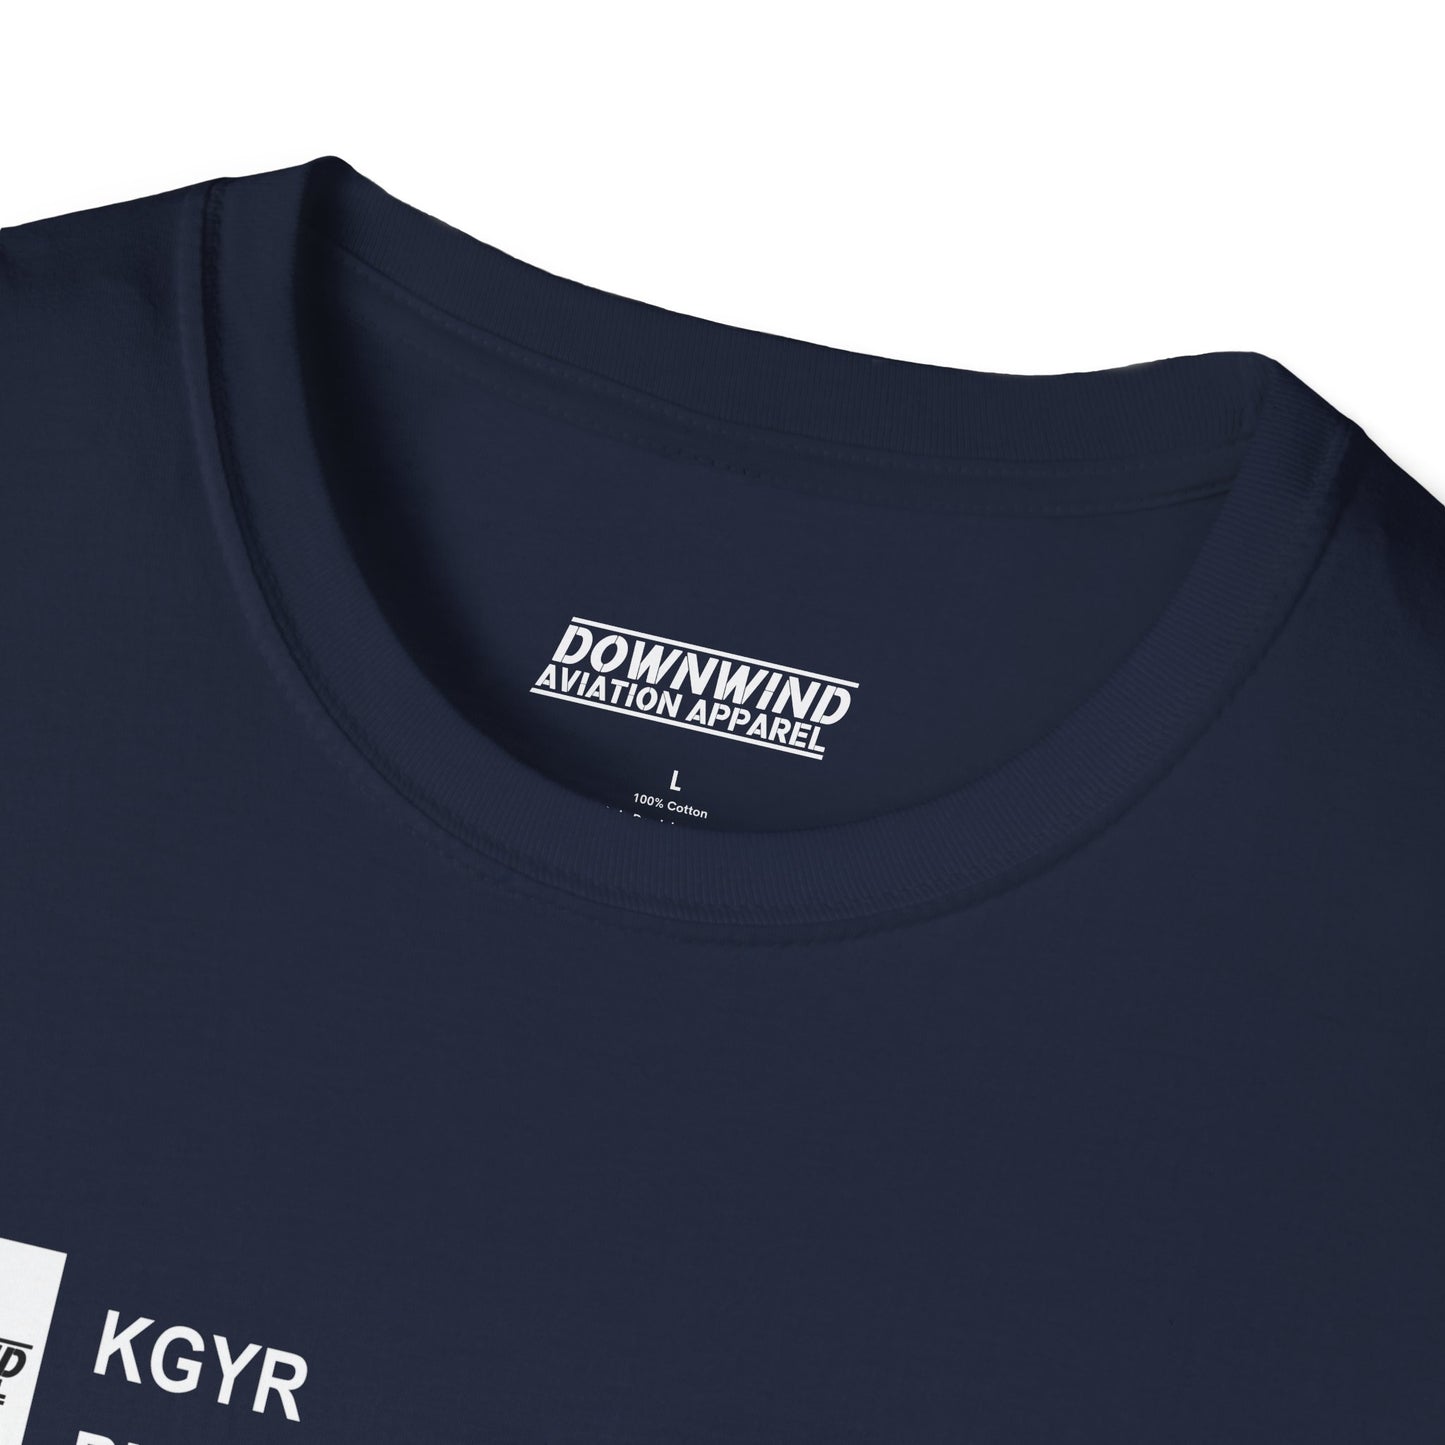 KGYR / Phoenix-Goodyear Airport T-Shirt